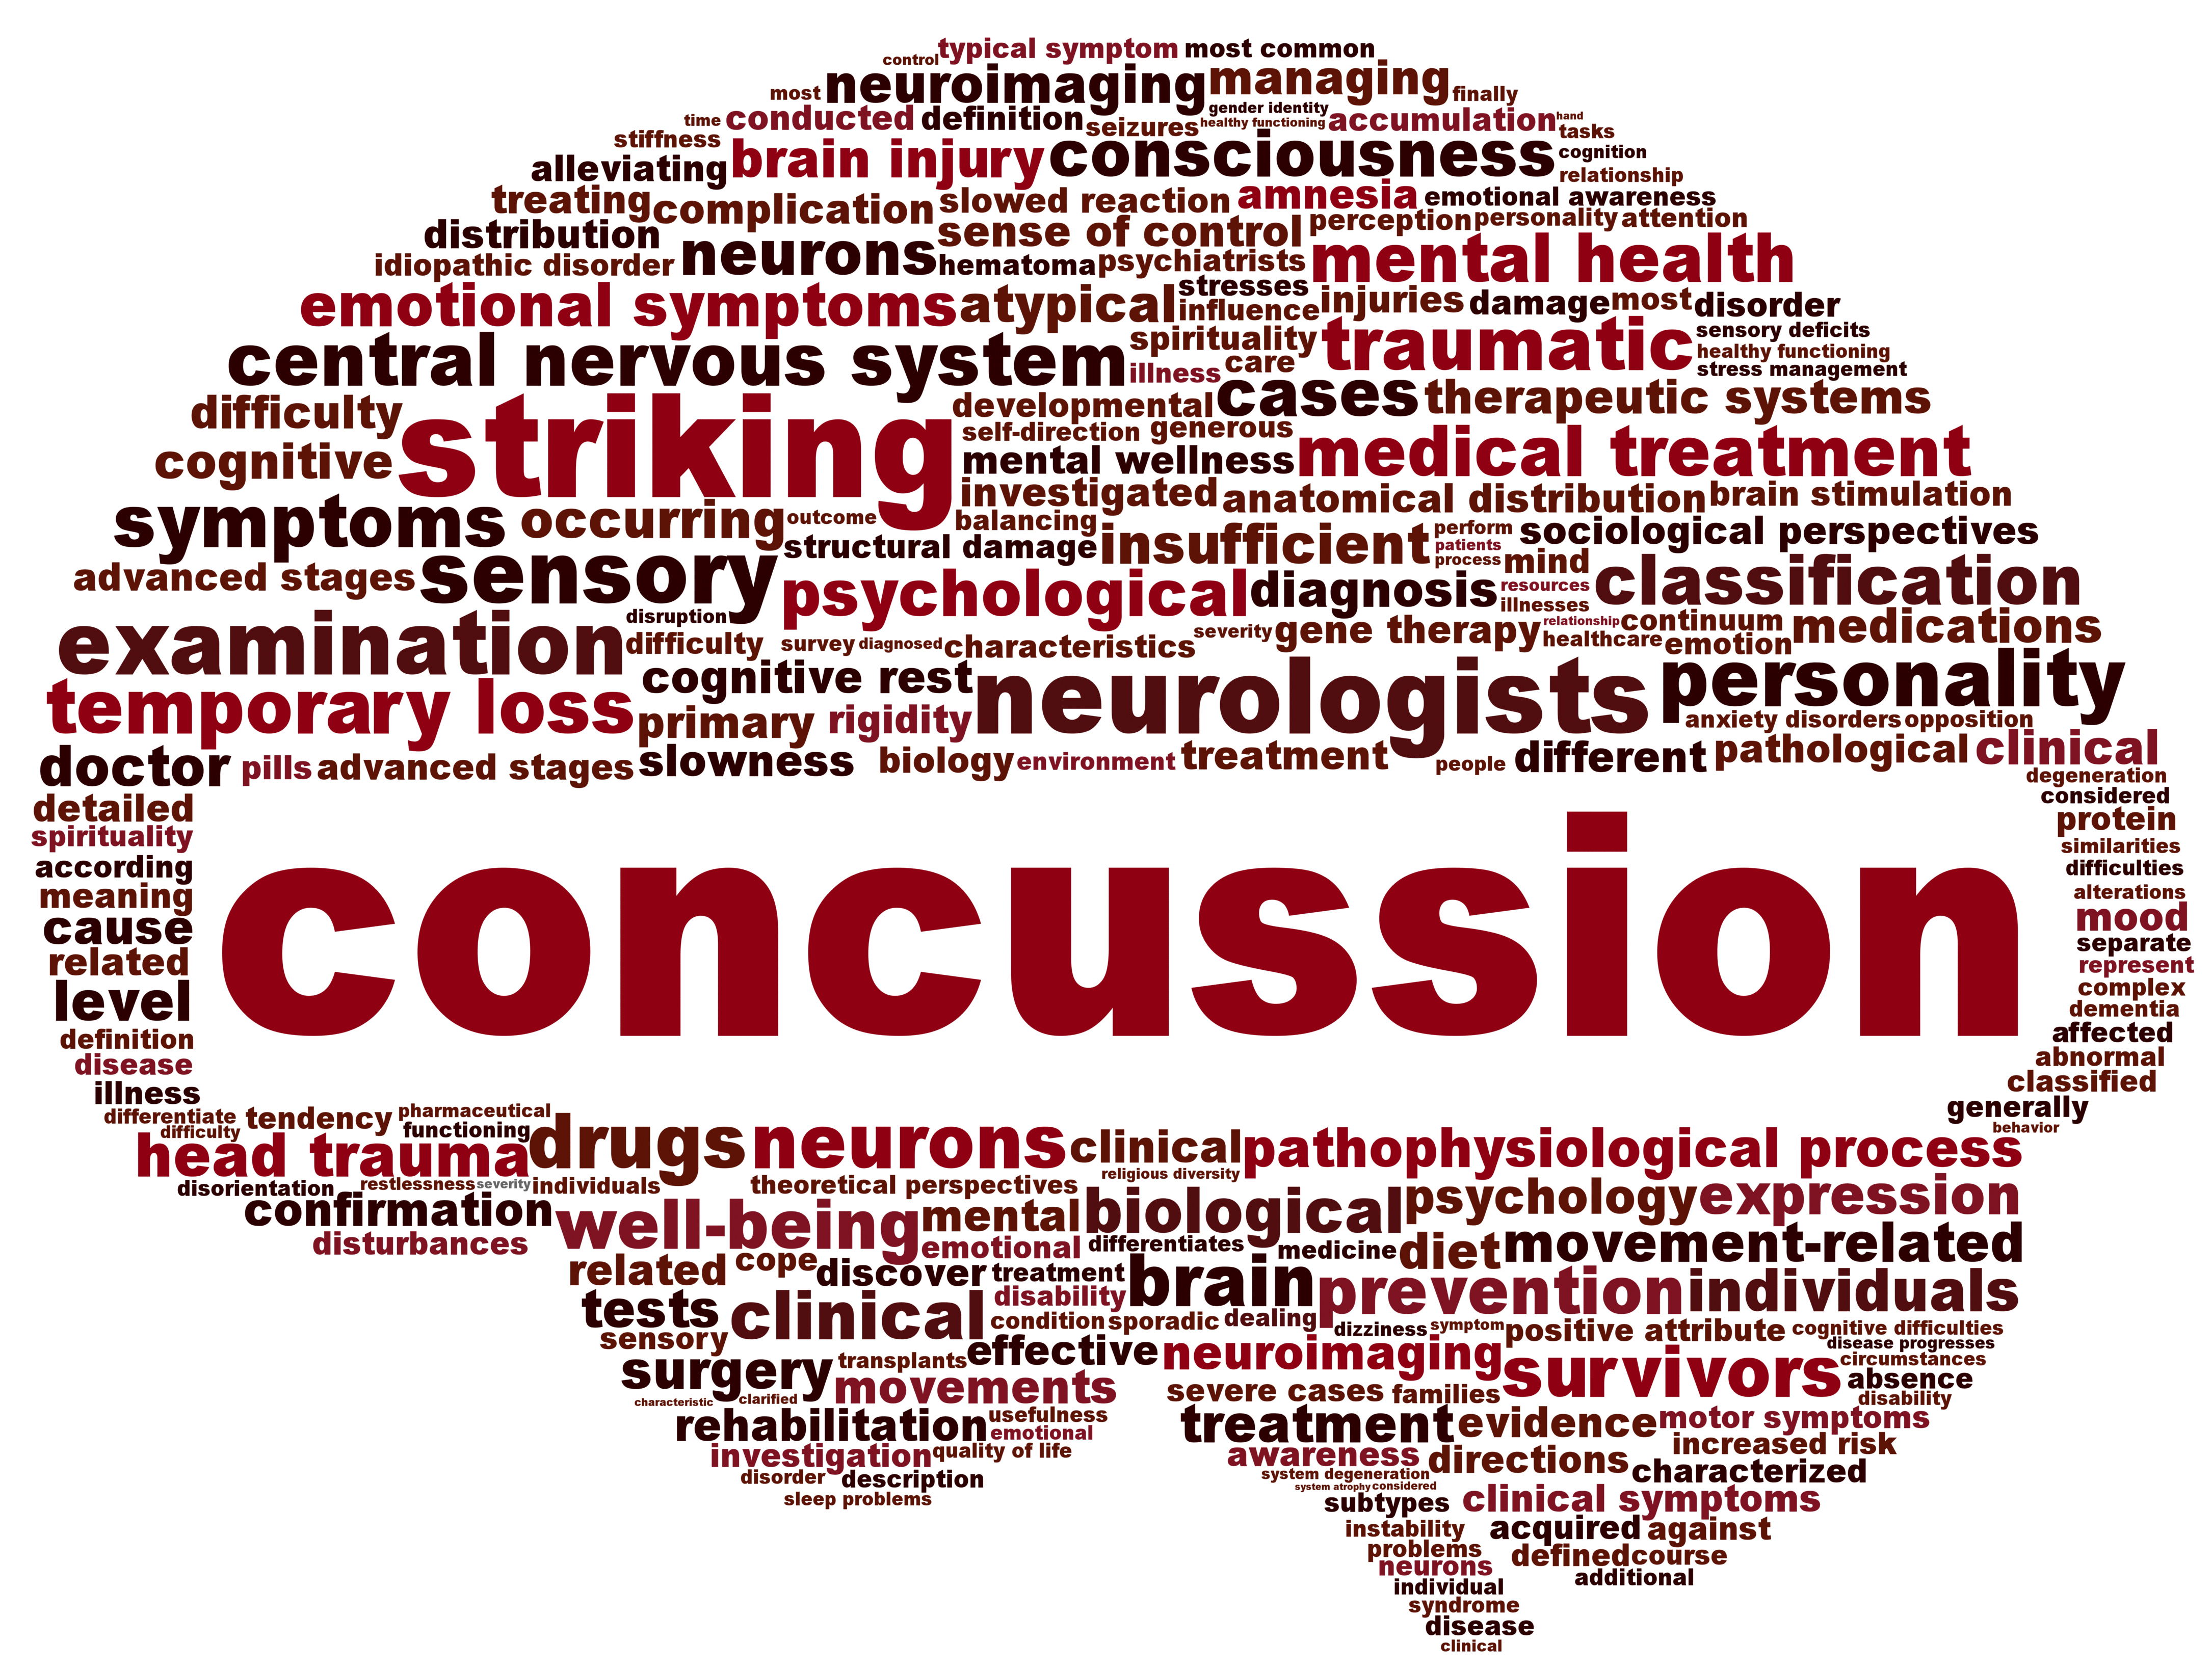 Concussion #10